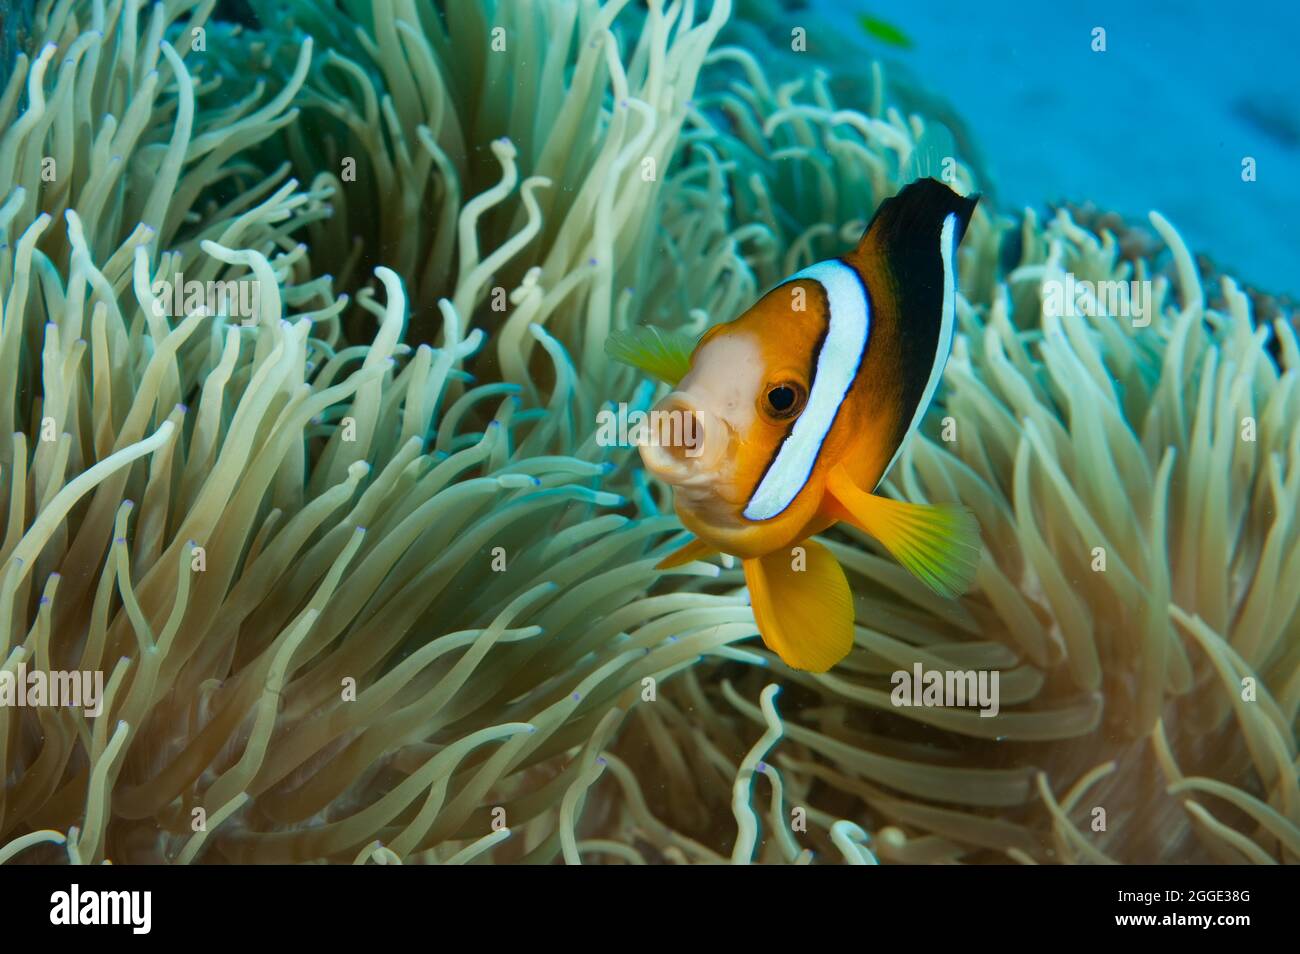 Madagascar anemonefish (Amphiprion latifasciatus) defends sea anemone, Indian Ocean, Pacific Ocean Stock Photo